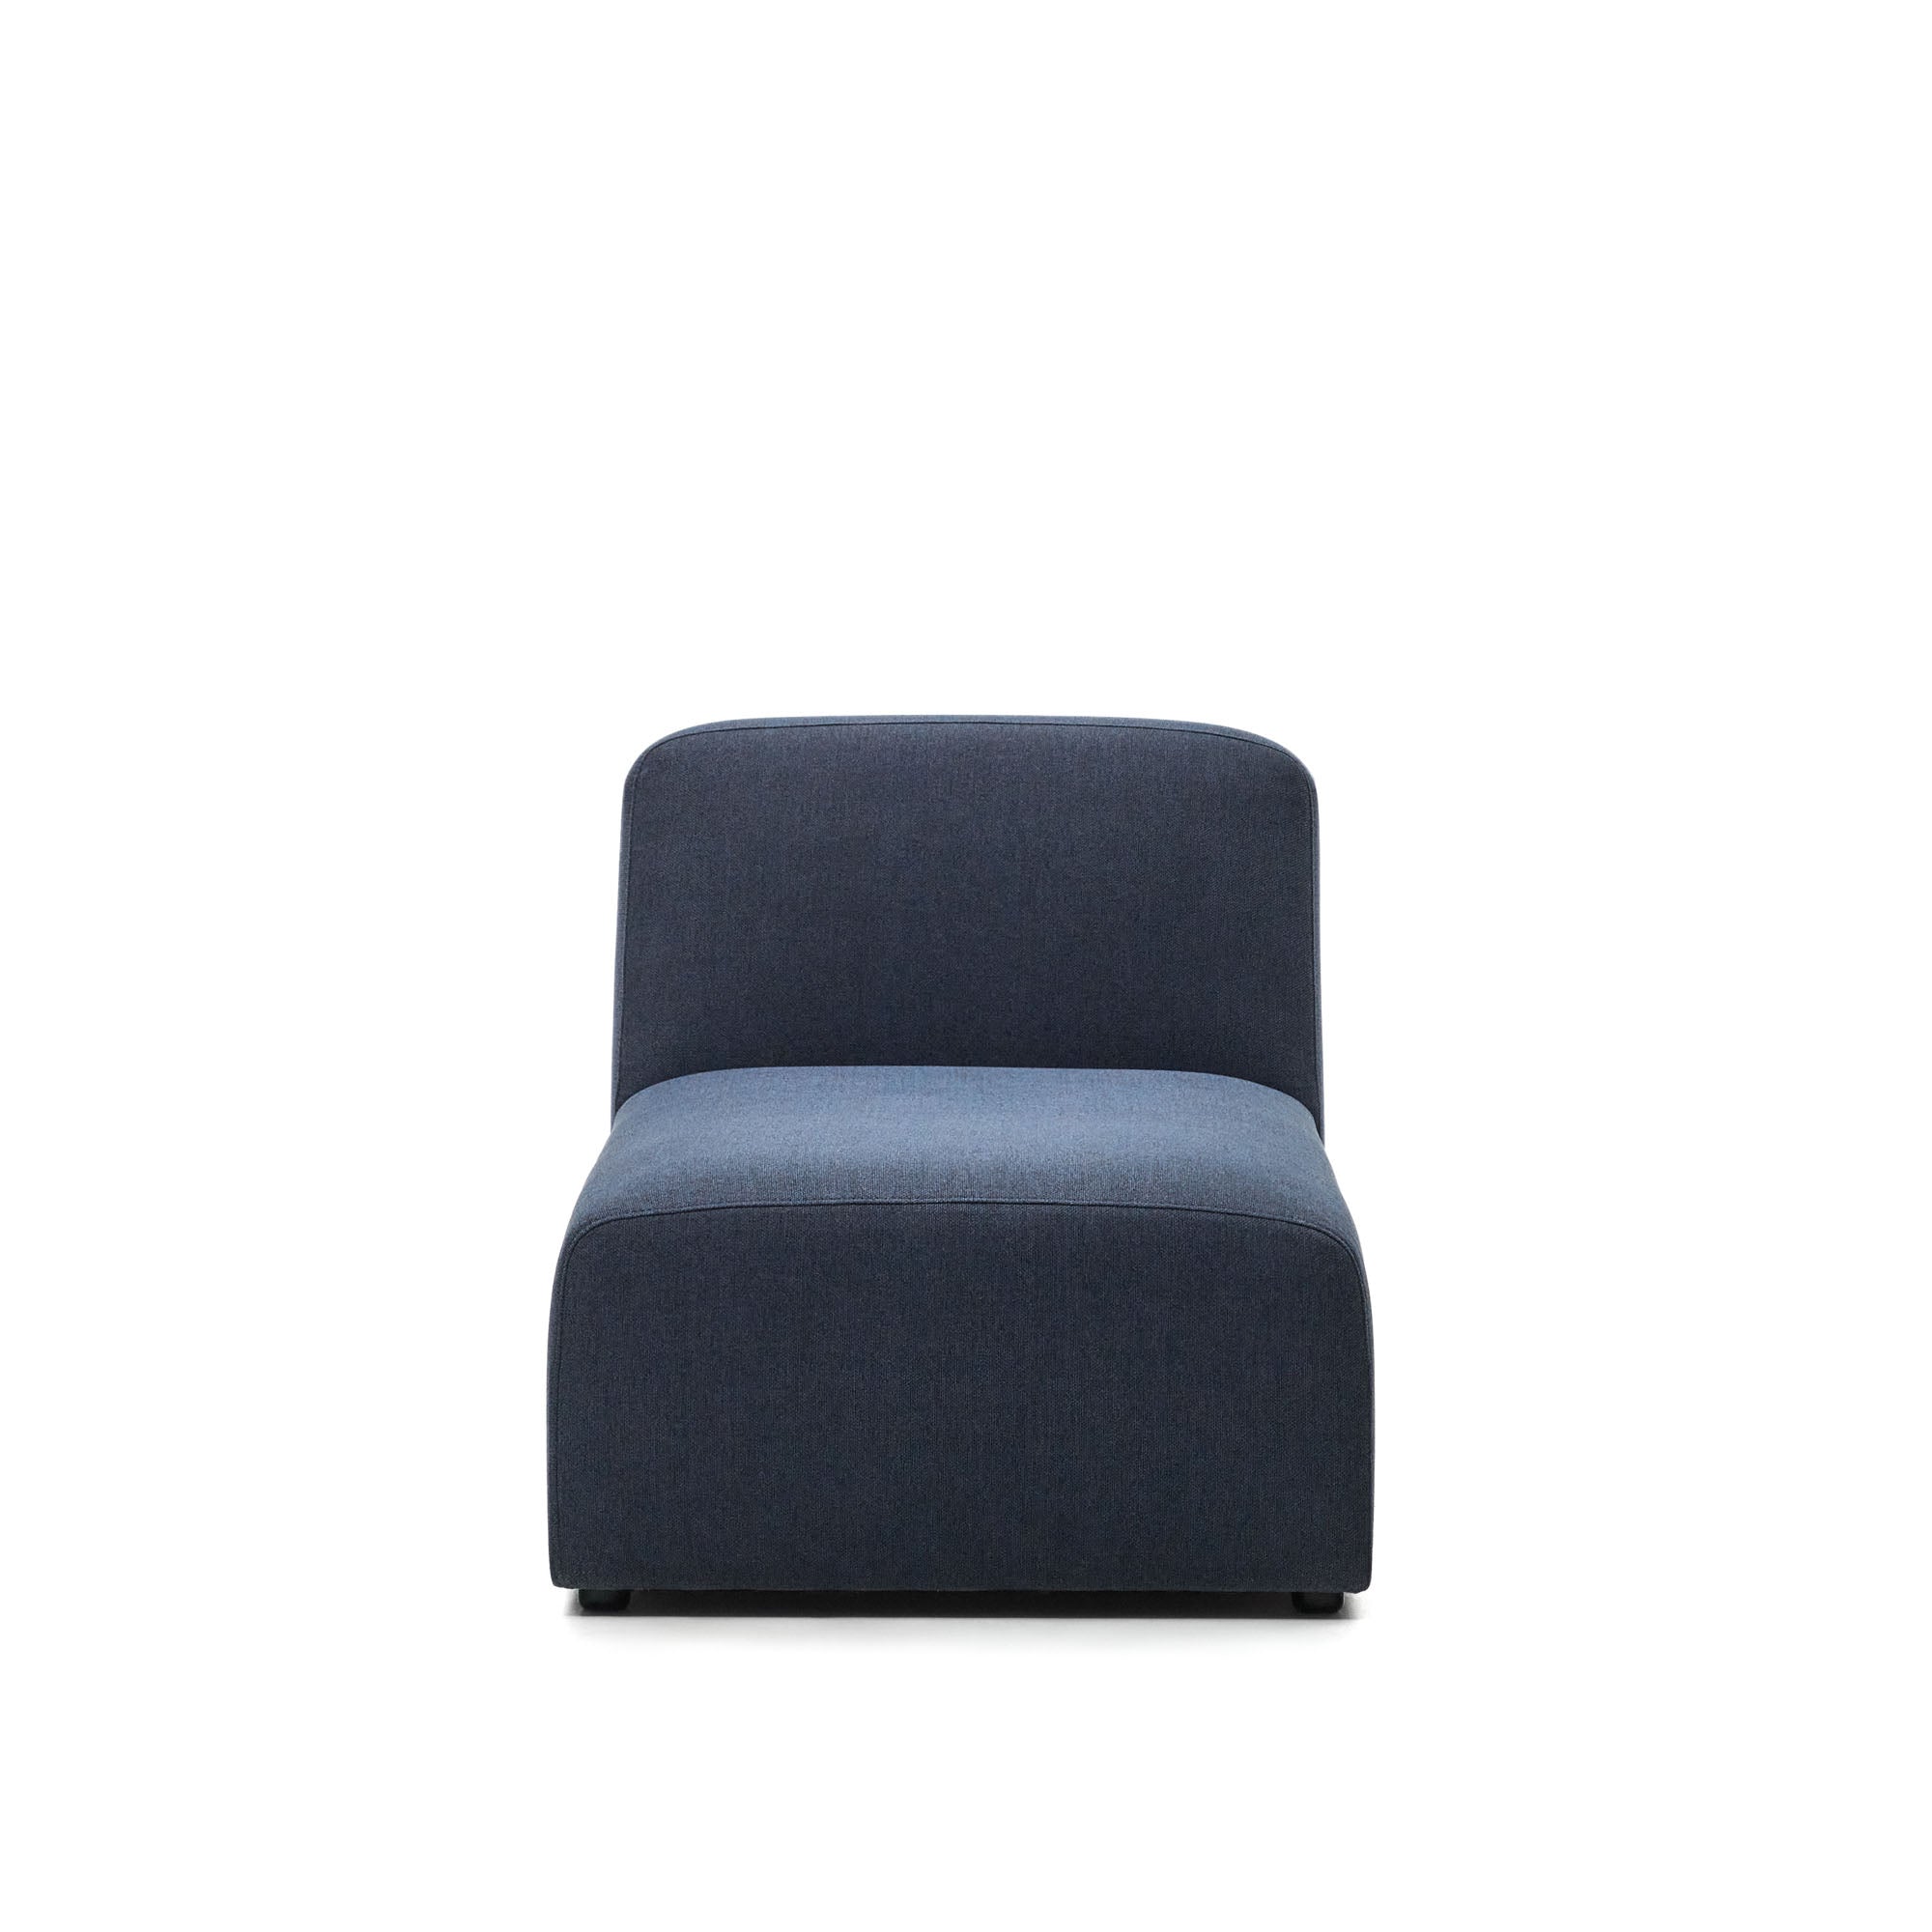 Neom chaise module in blue, 152 x 75 cm